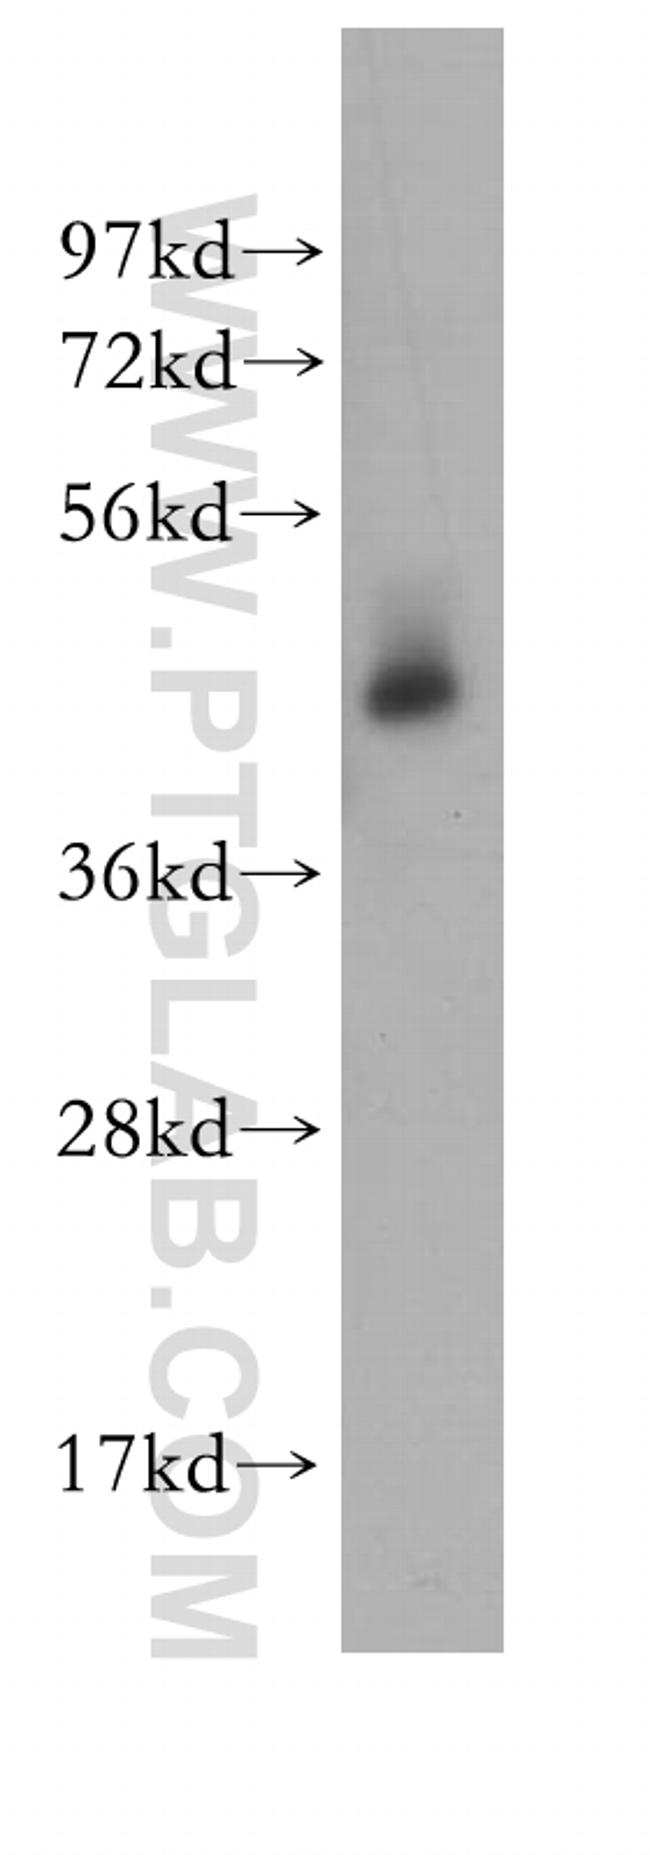 STAMBP Antibody in Western Blot (WB)